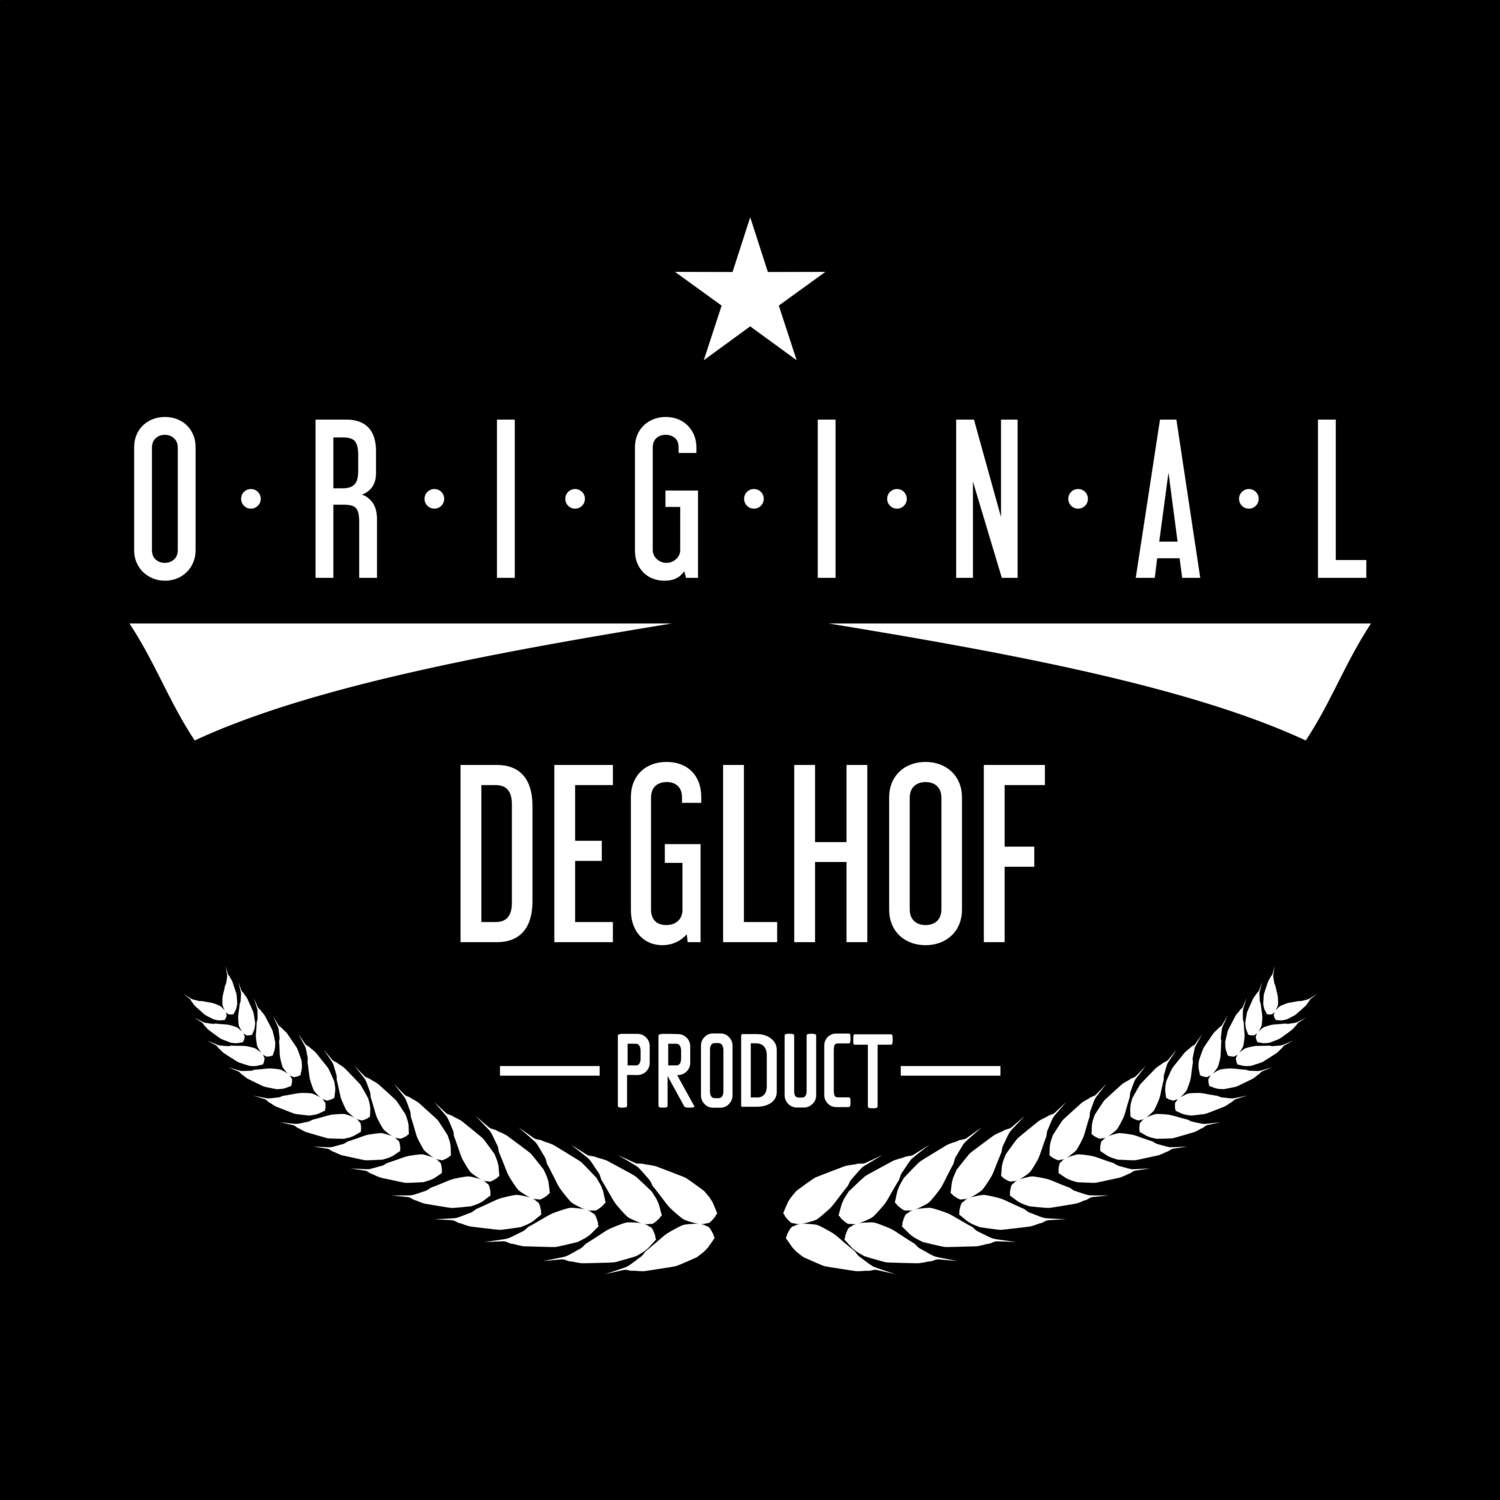 Deglhof T-Shirt »Original Product«